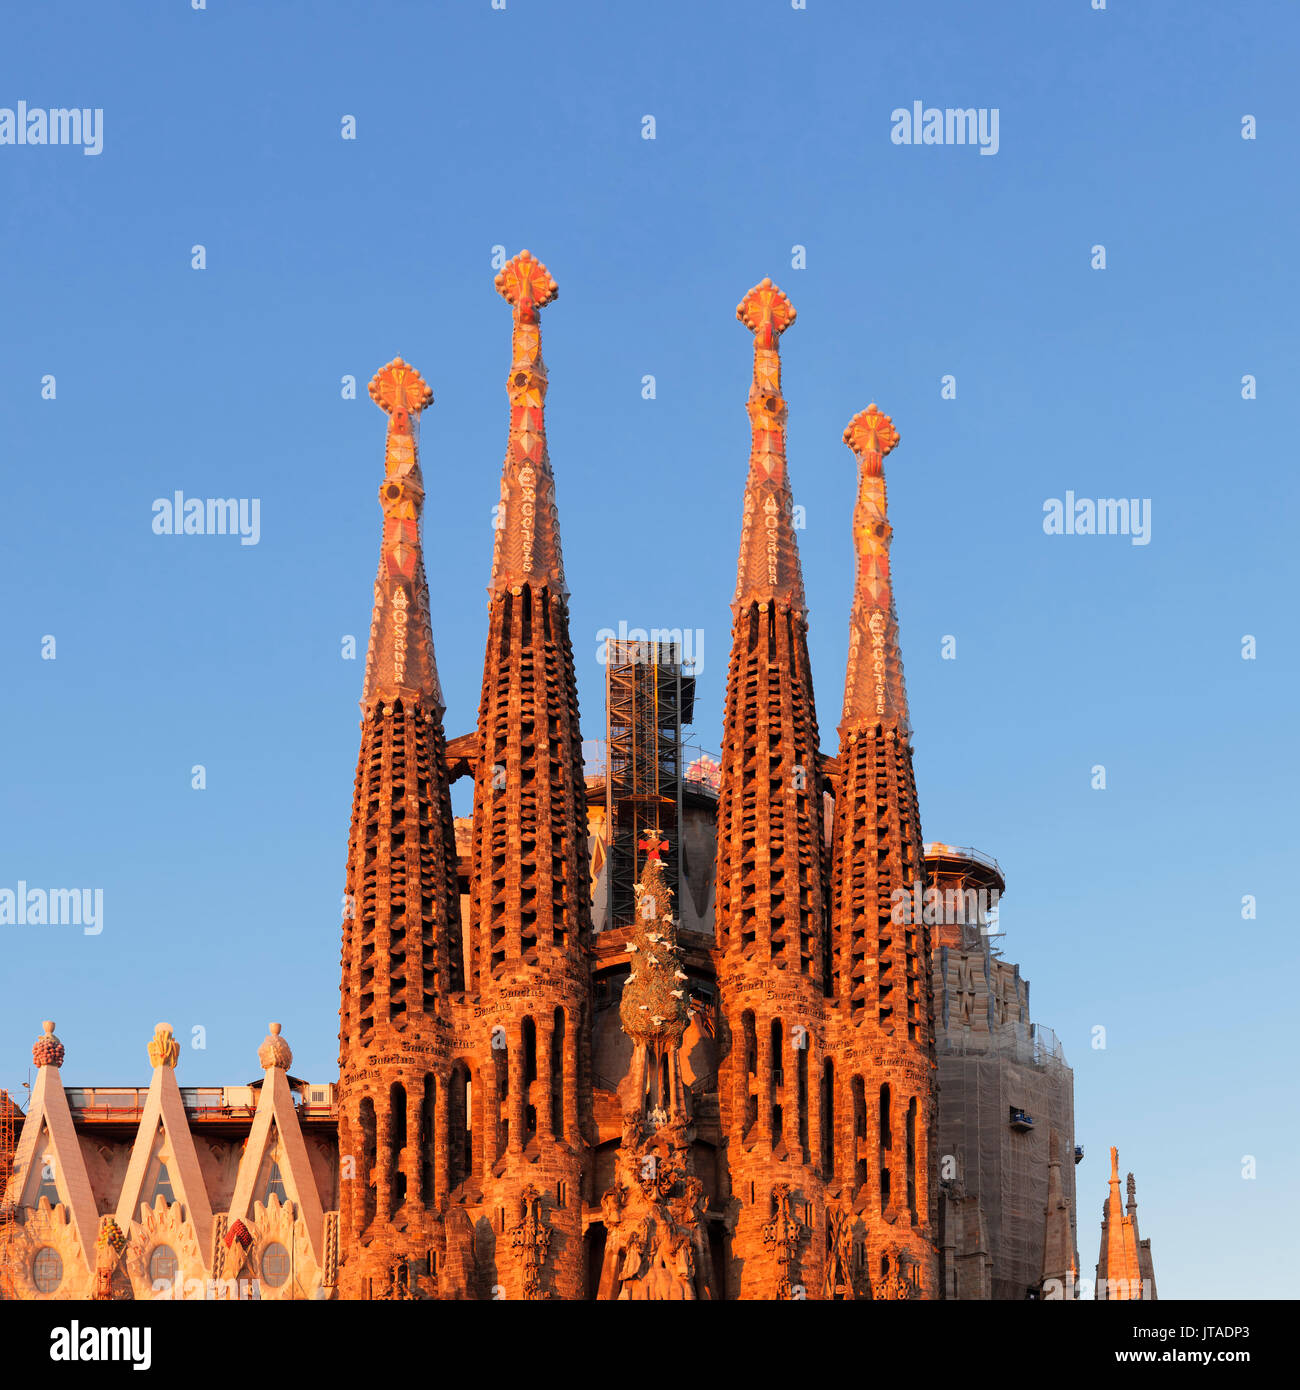 La Sagrada Familia, de l'architecte Antonio Gaudi, UNESCO World Heritage Site, Barcelone, Catalogne, Espagne, Europe Banque D'Images